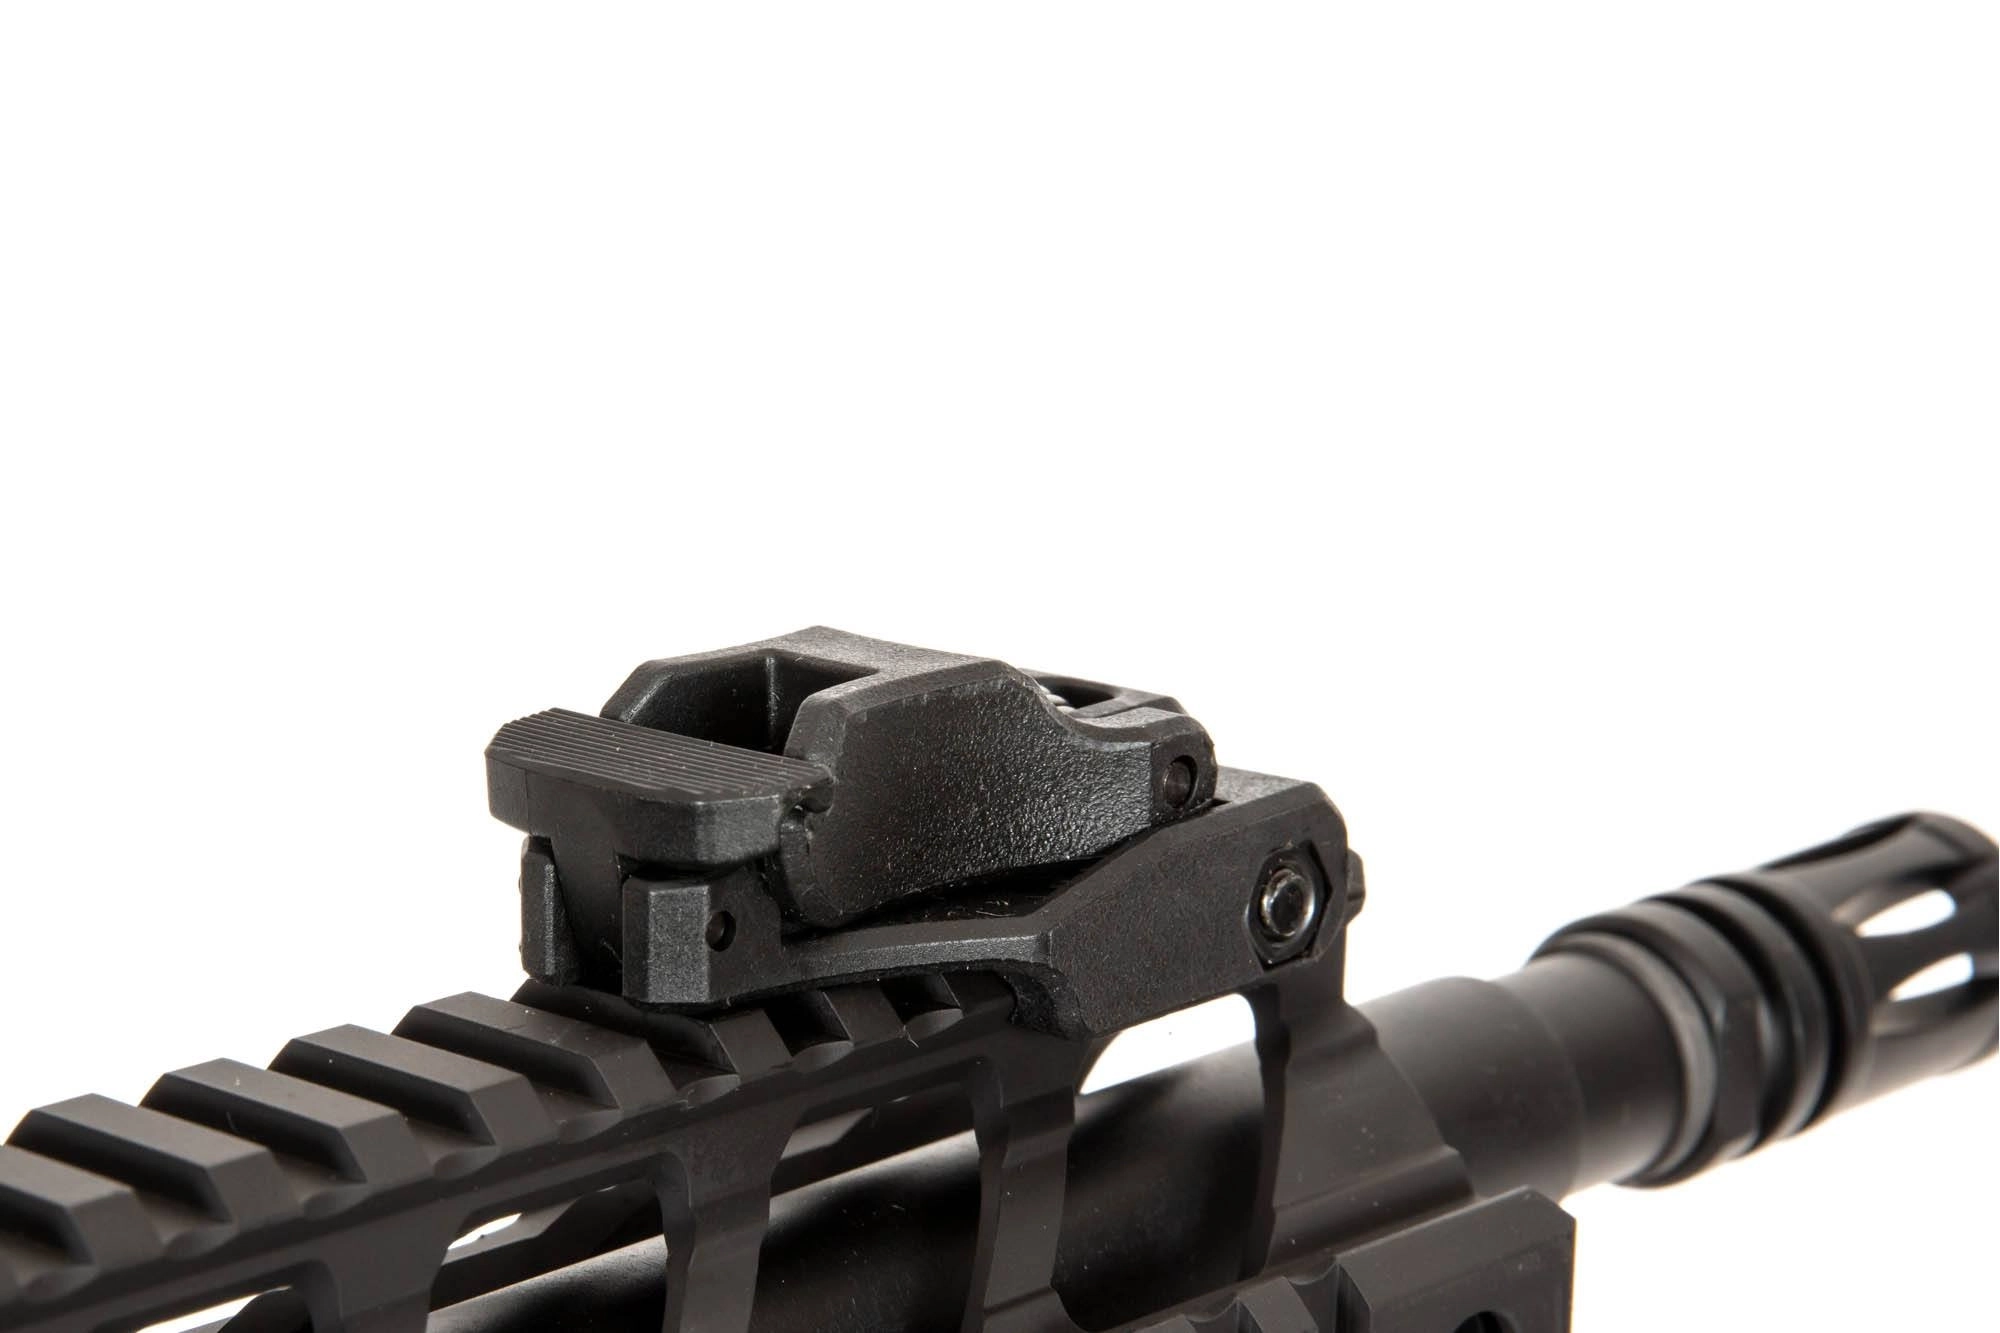 Specna Arms SA-C15 CORE sähköase - musta